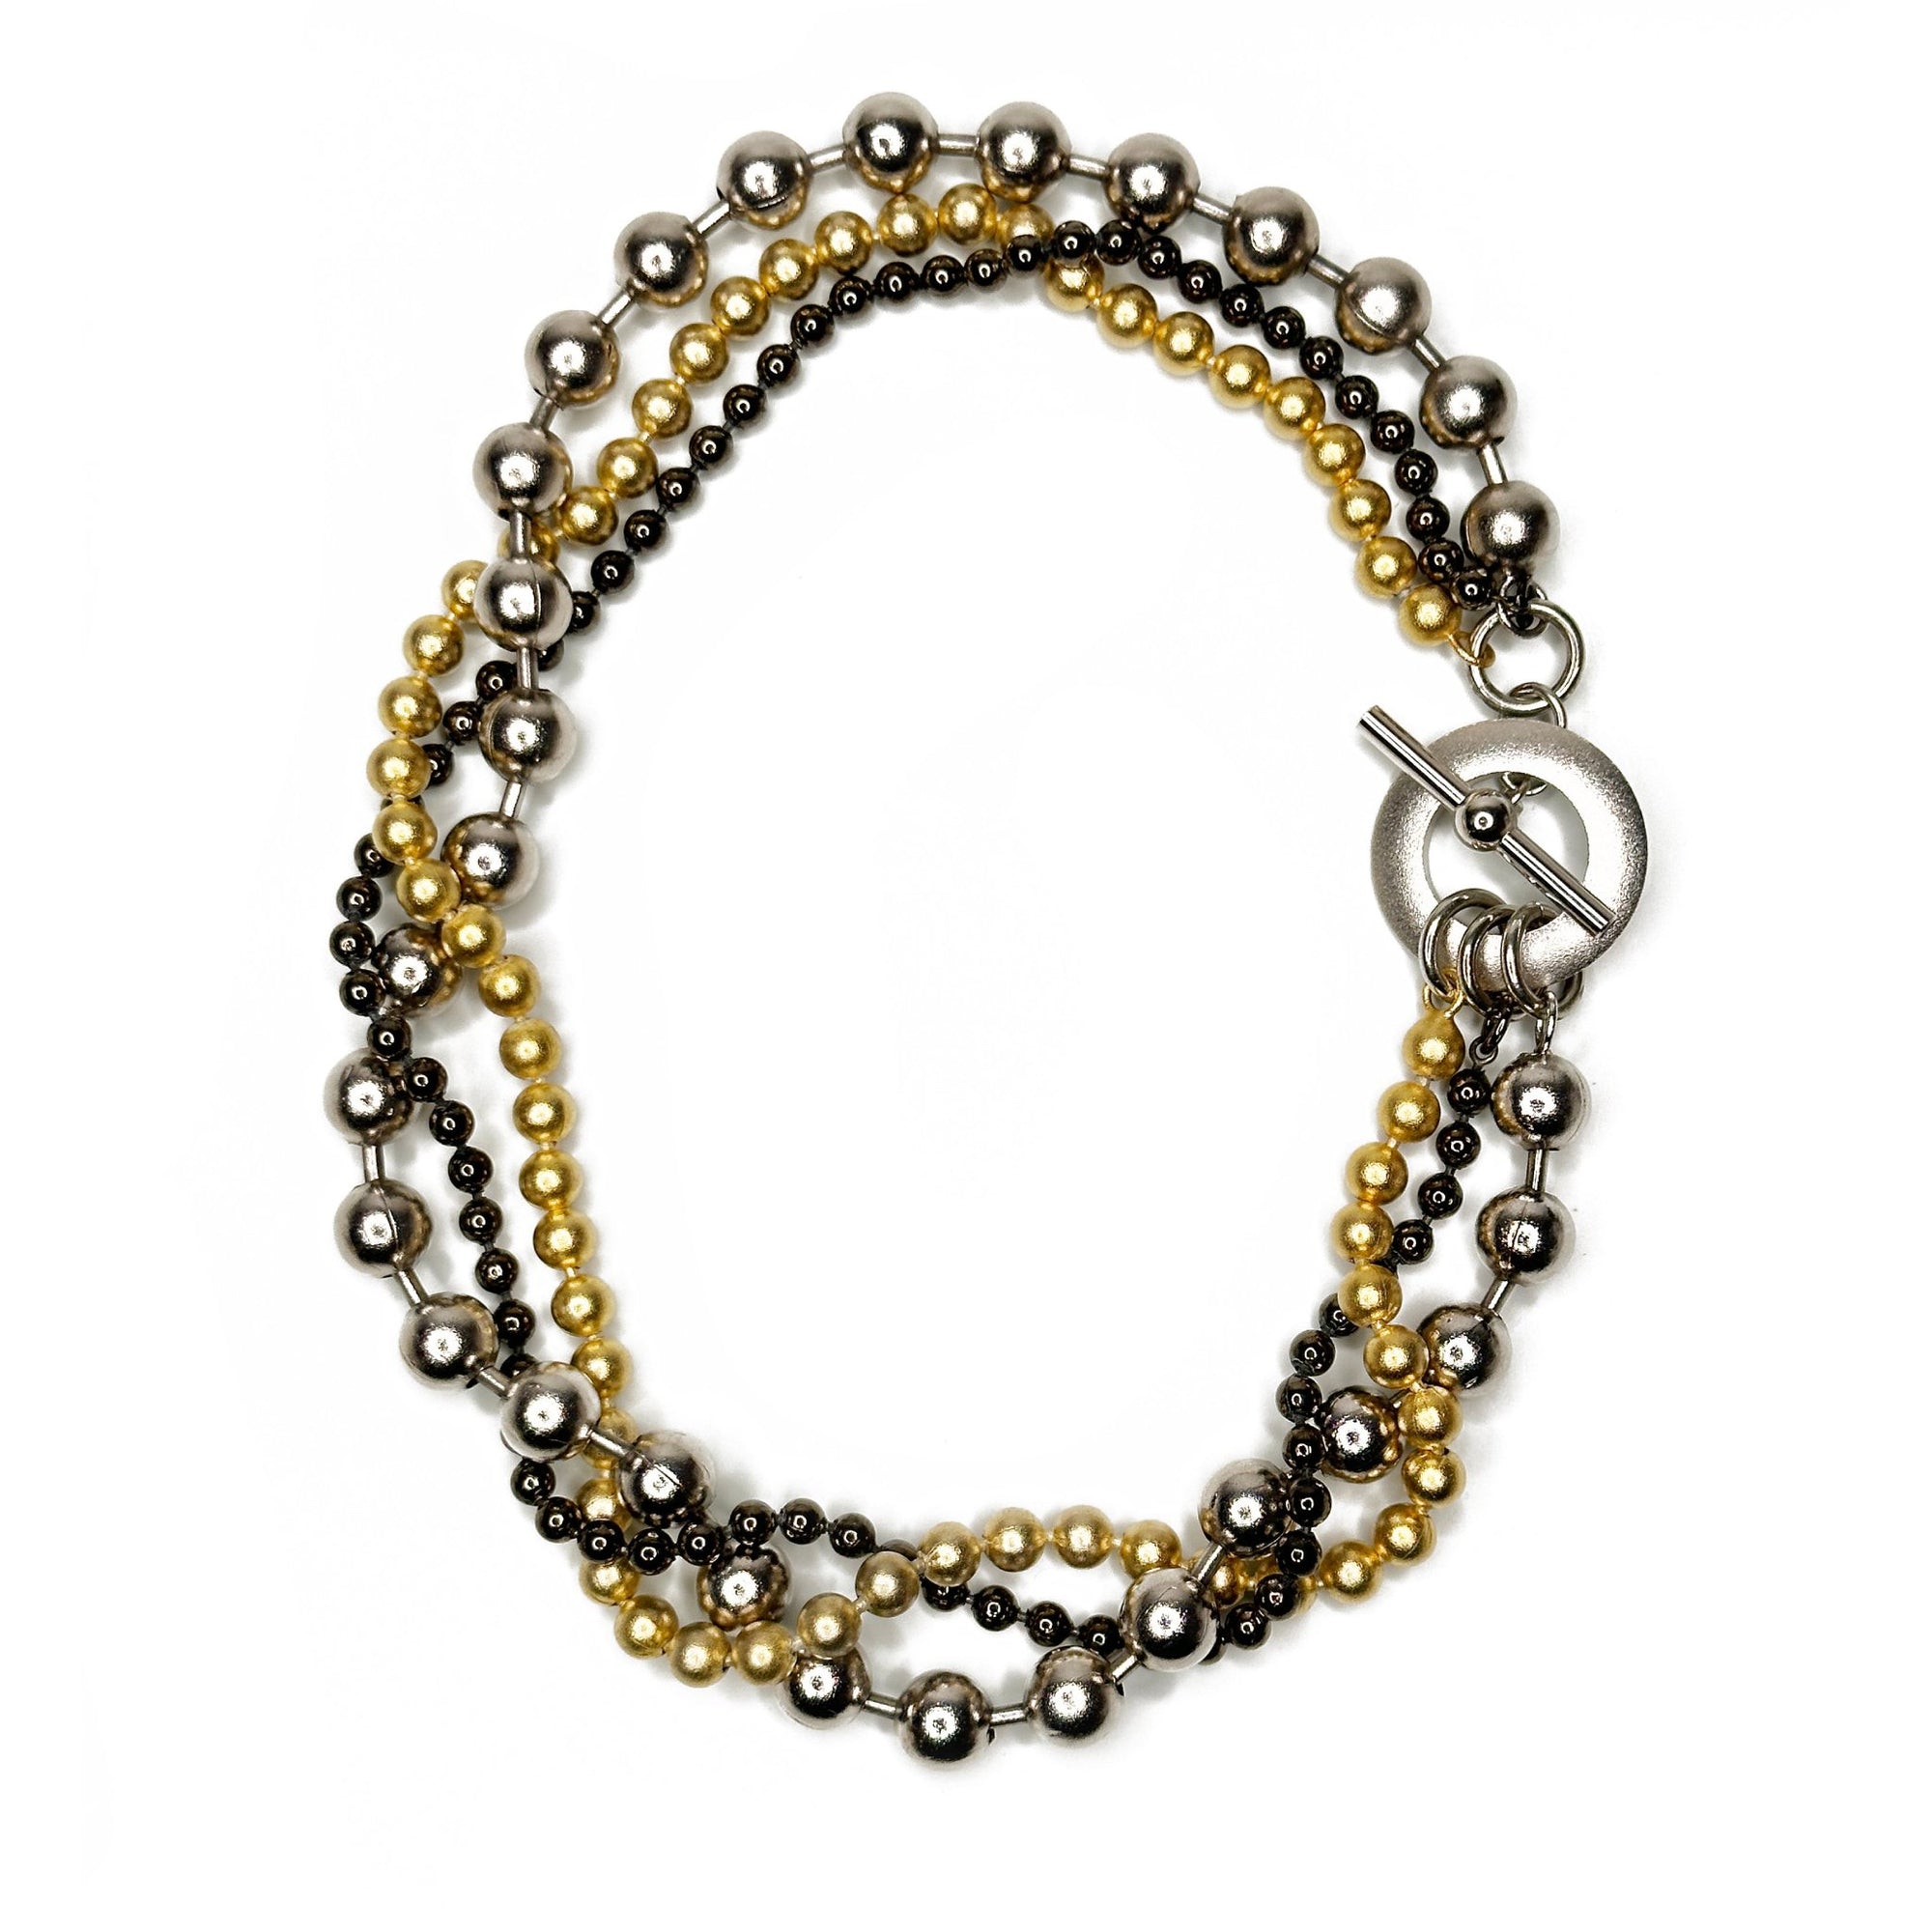 3 Strand Bead Chain Necklace | Erica Zap Designs